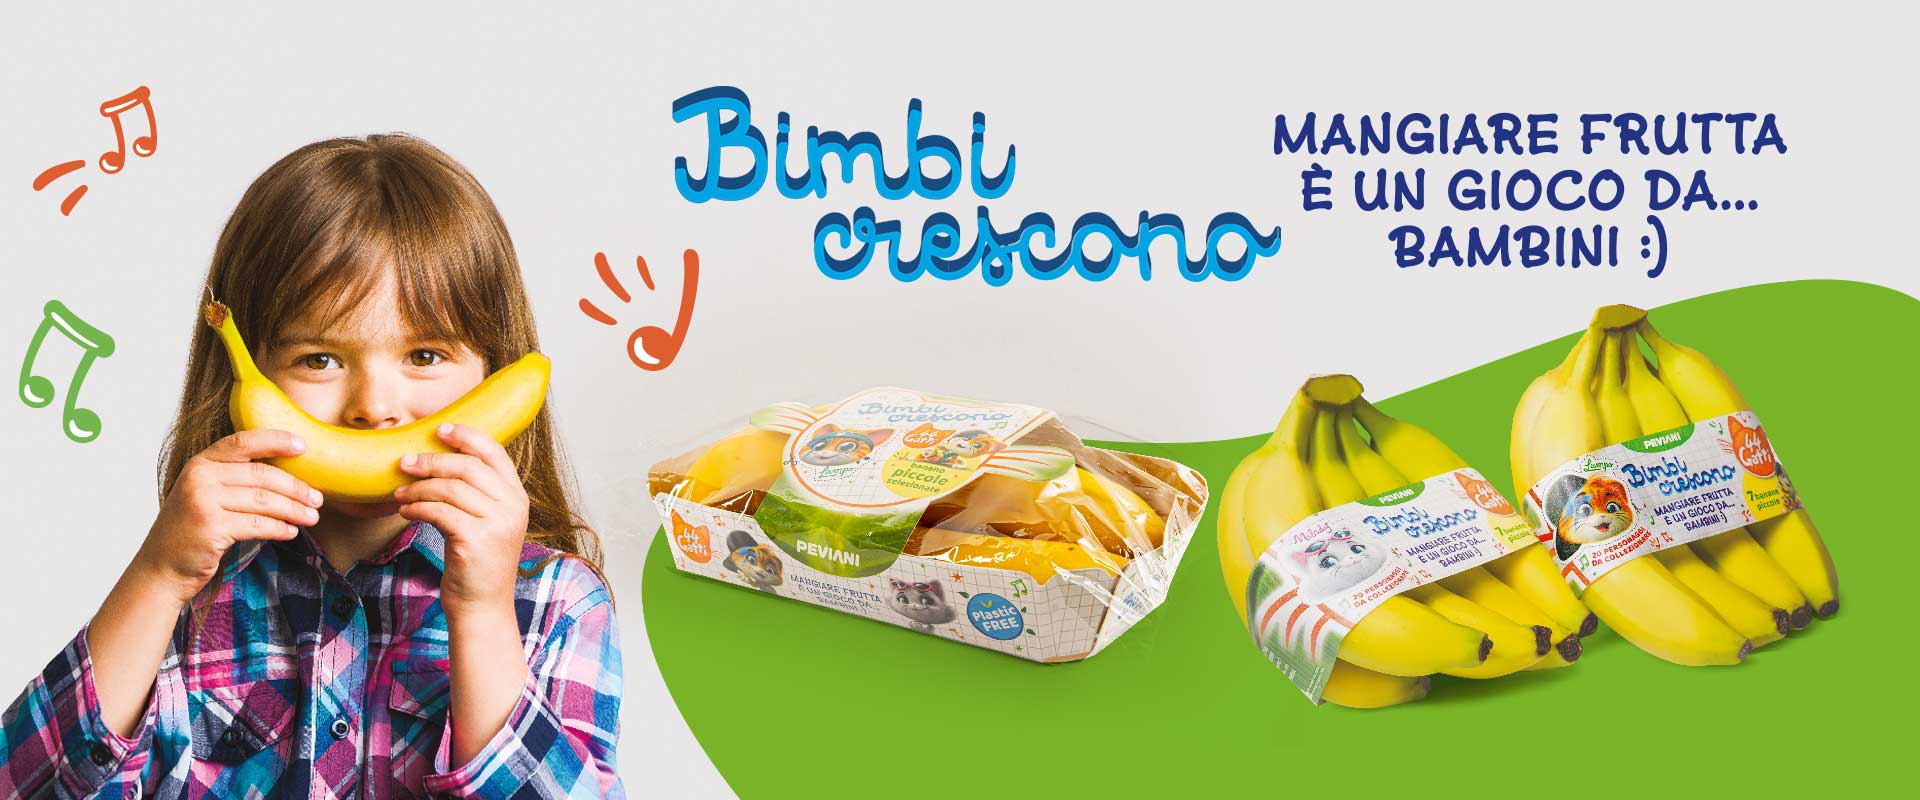 The packaging for the Bimbi Crescono bananas